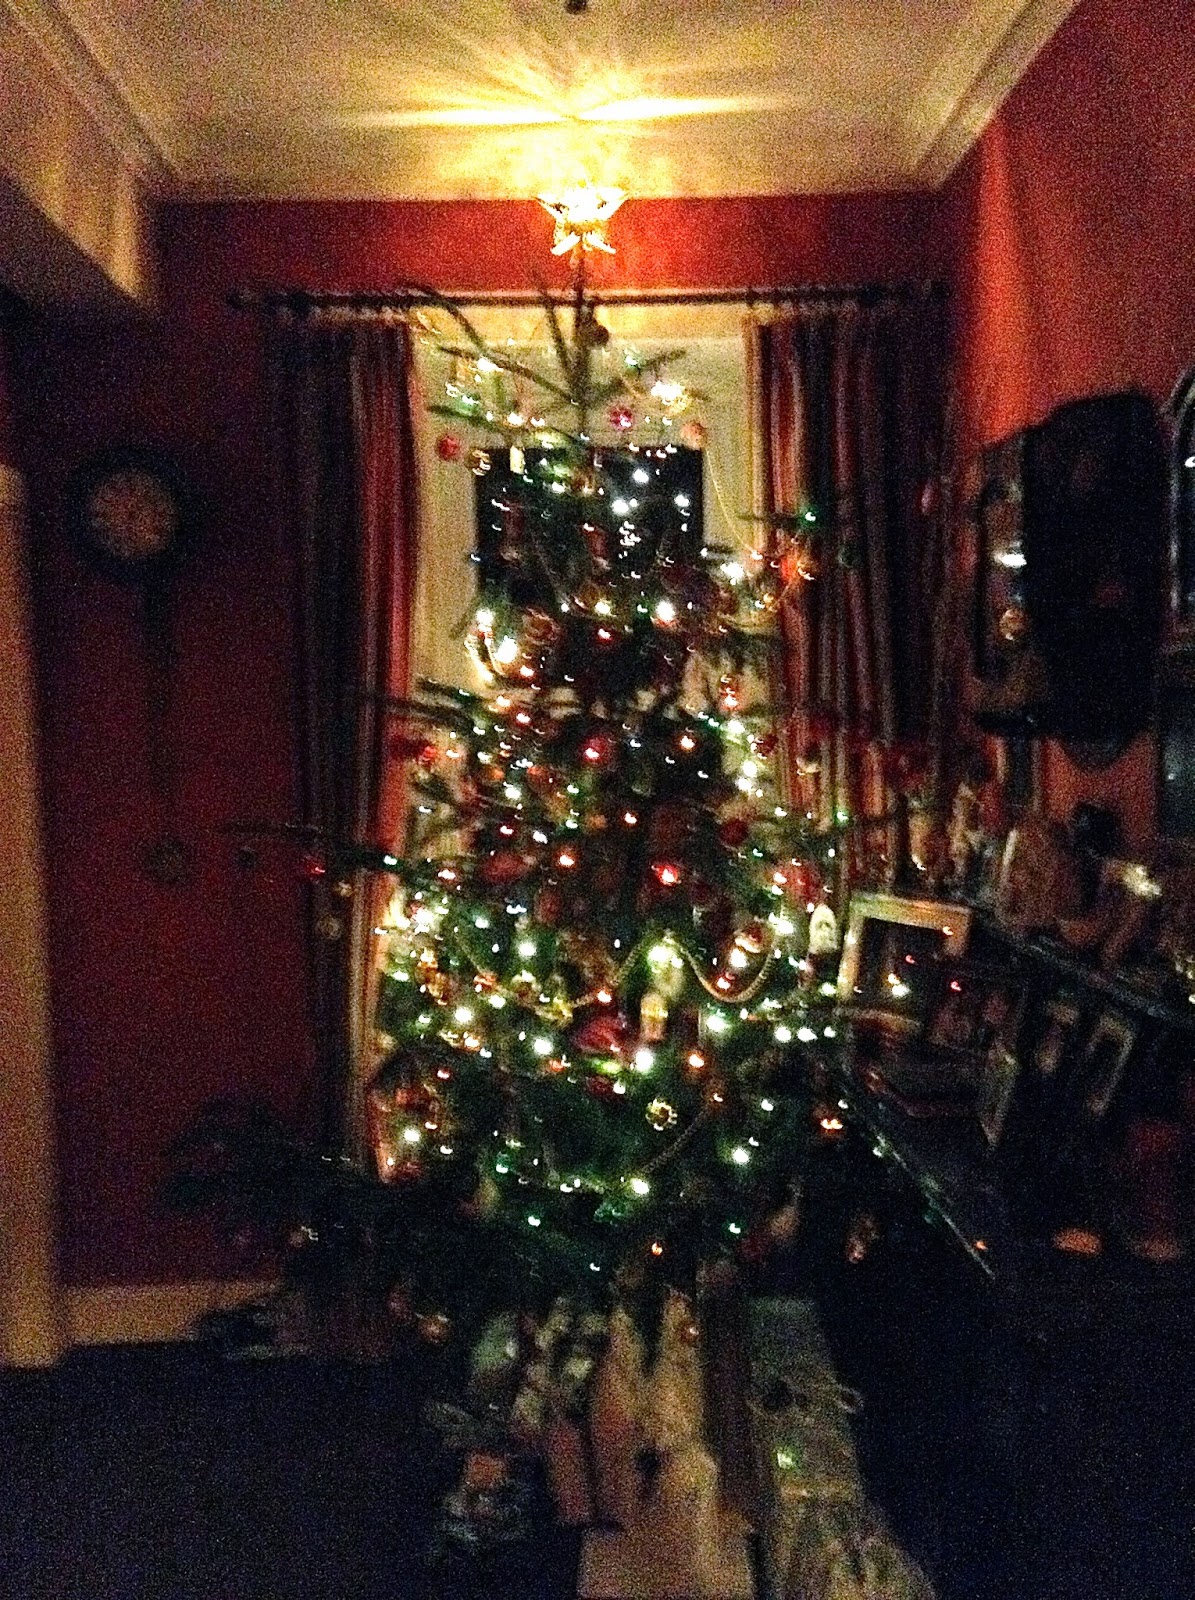 Christmas tree with lights, star & presents